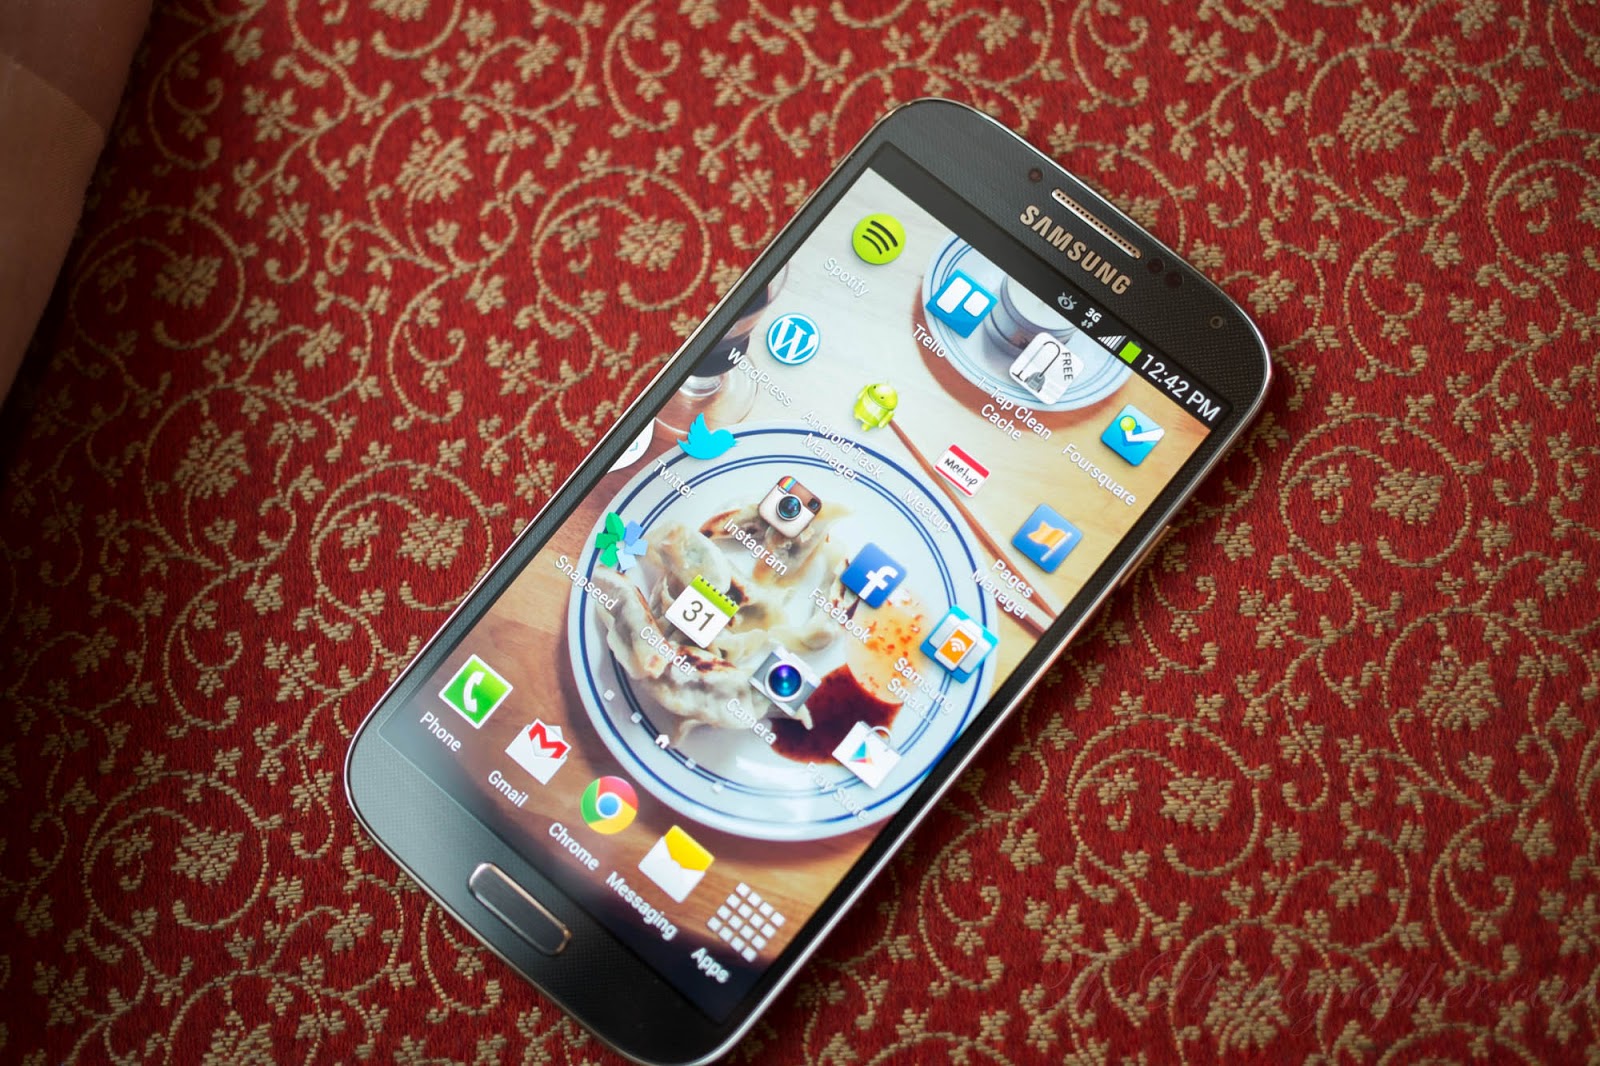 Samsung Galaxy S4 HD Wallpapers | HDWallpapers360.com - High ...